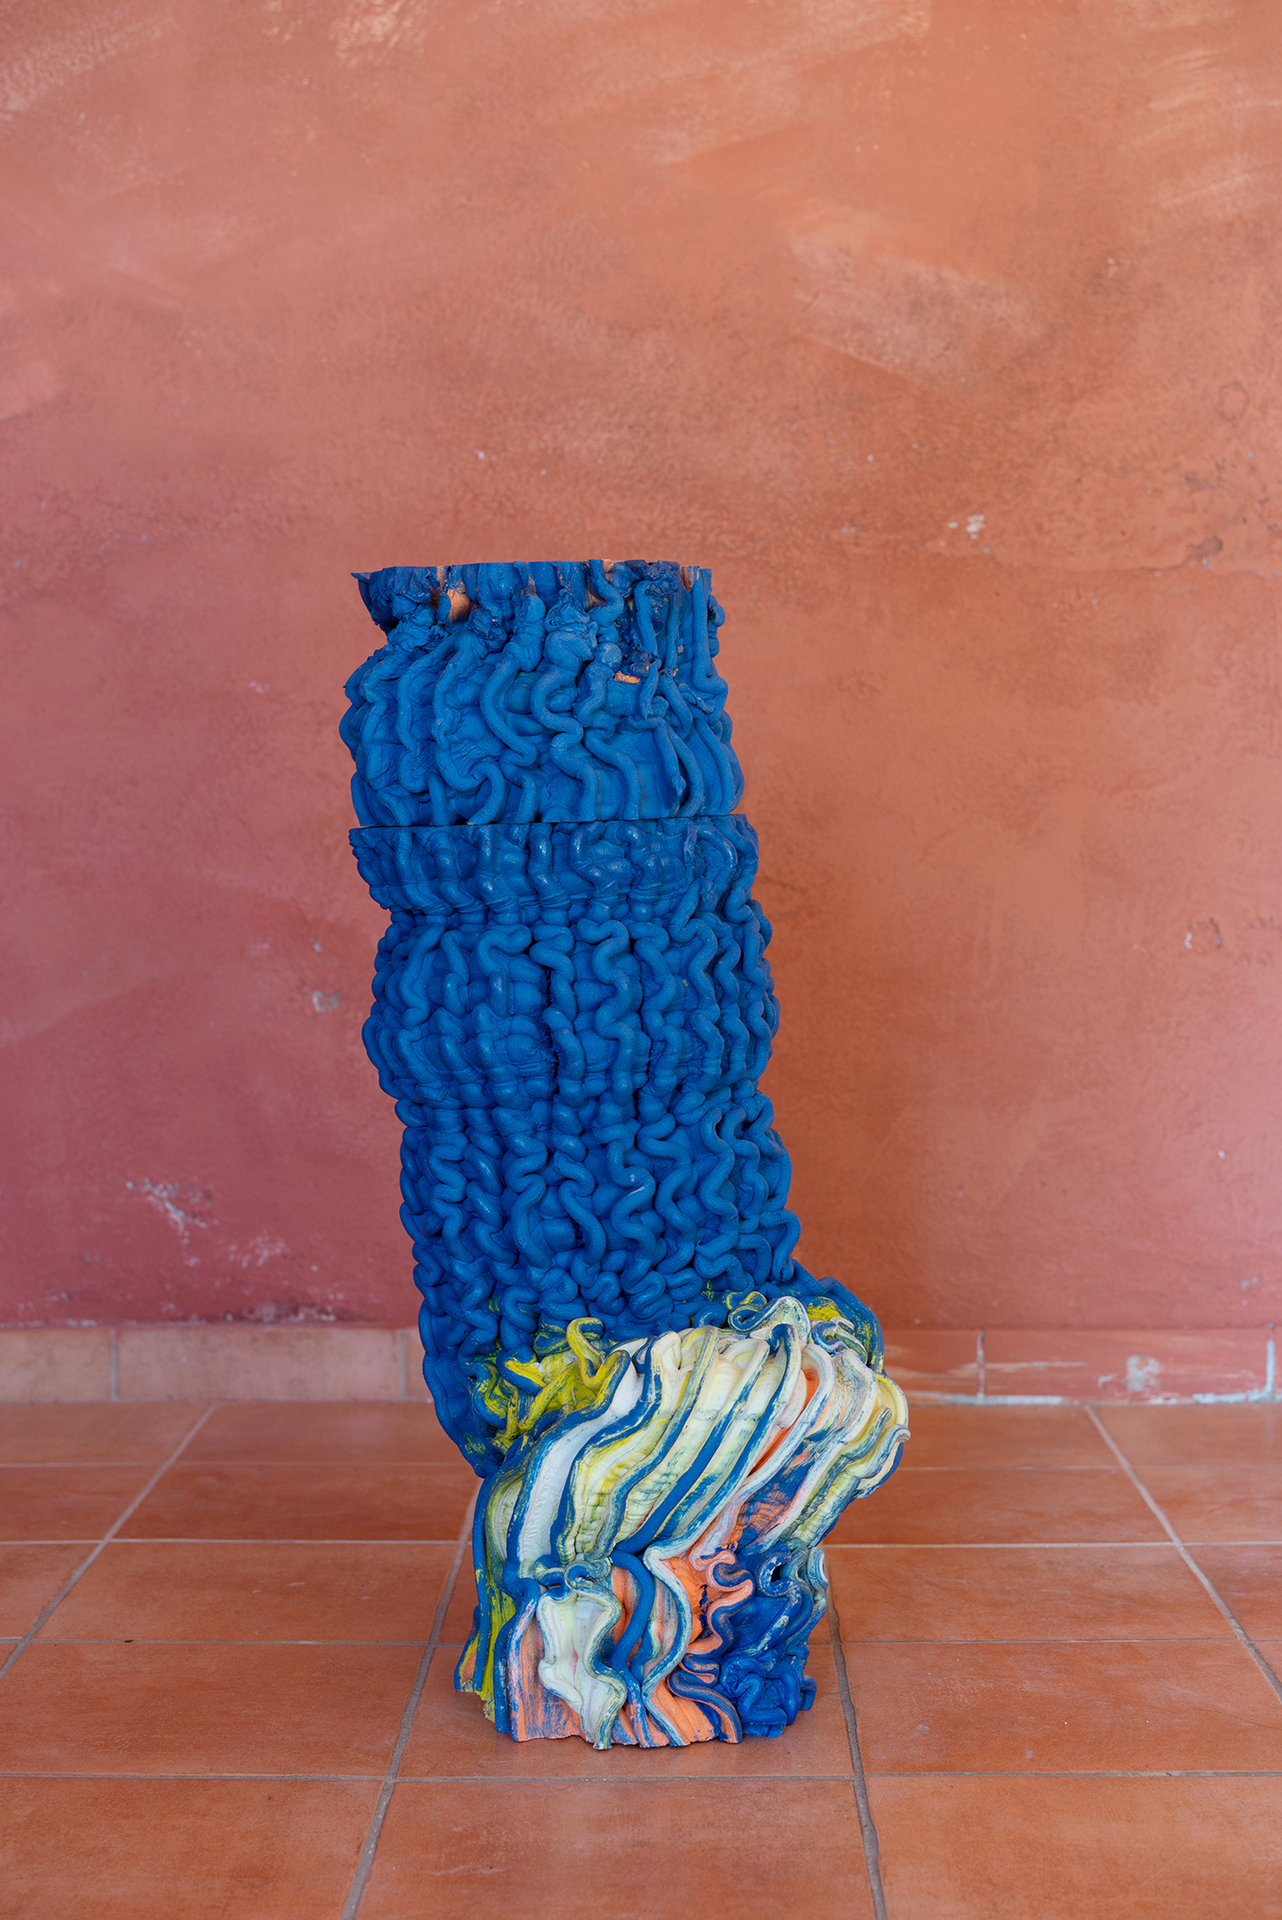 Anton Alvarez, "0510201411", 2021 (Coloured porcelain, 80 x 35 x 36 cm).